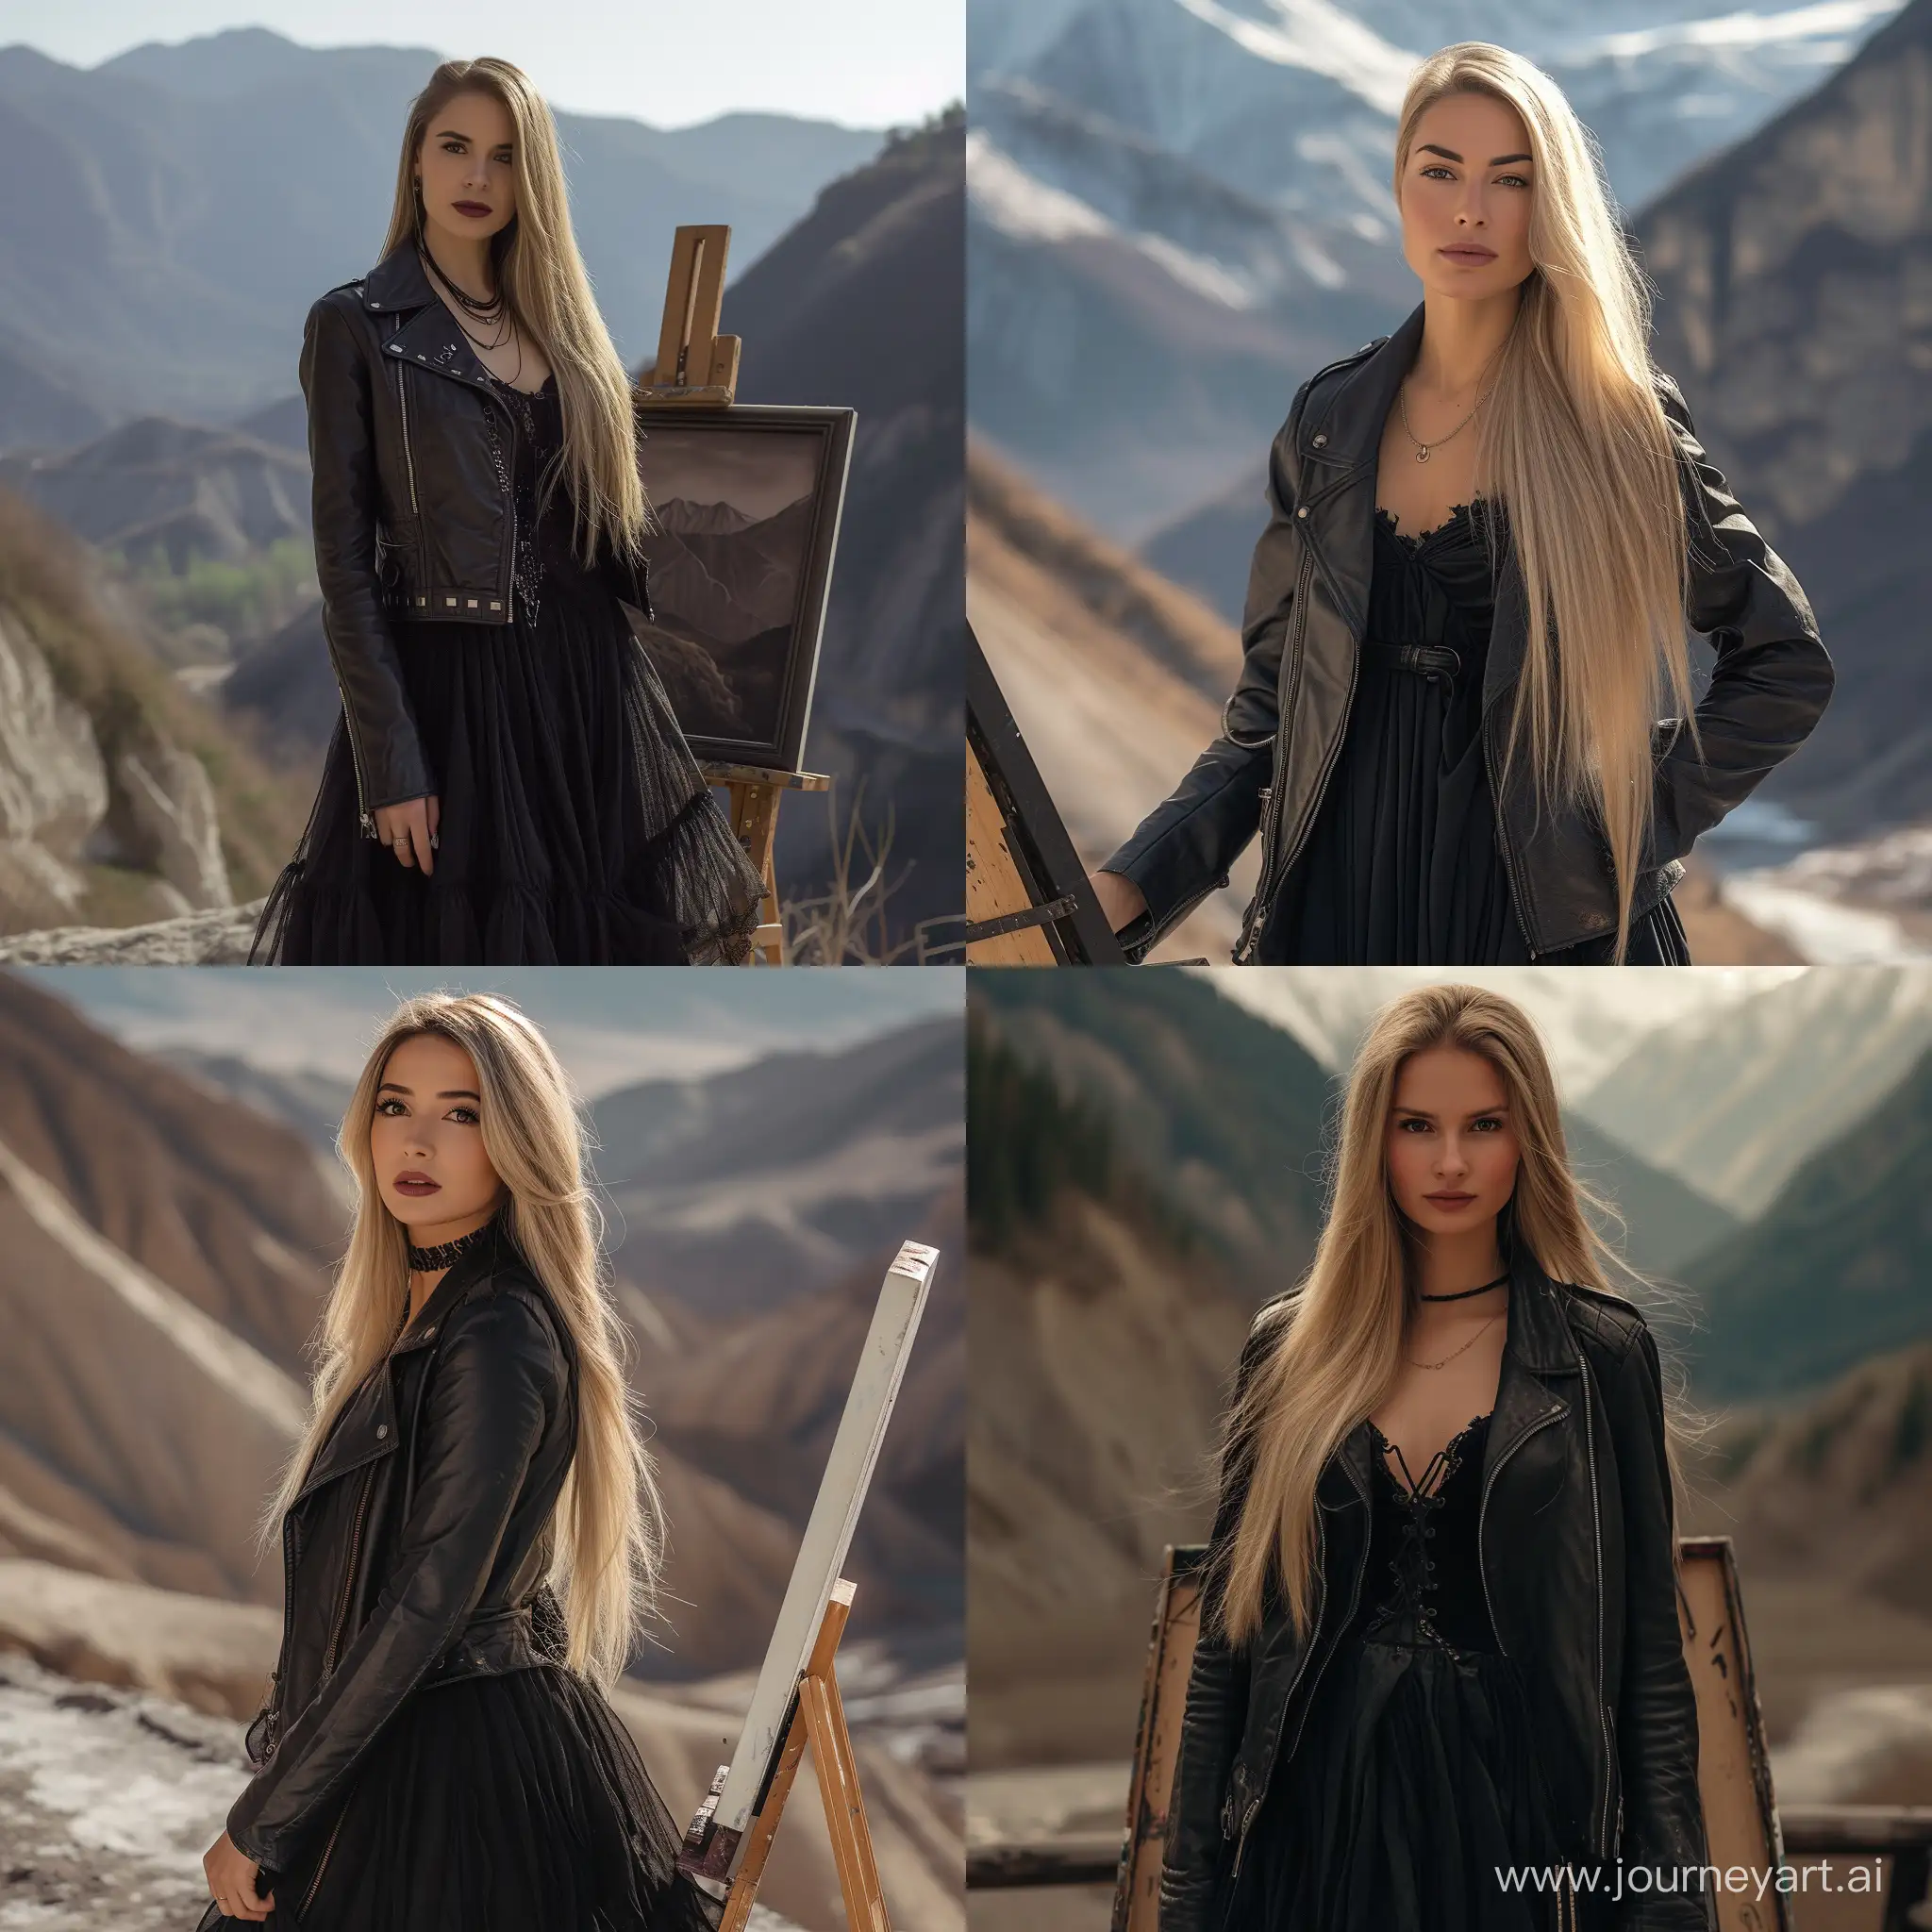 Elegant-35YearOld-Female-Artist-in-Black-Chiffon-Dress-and-Leather-Jacket-Creating-Cinematic-Masterpiece